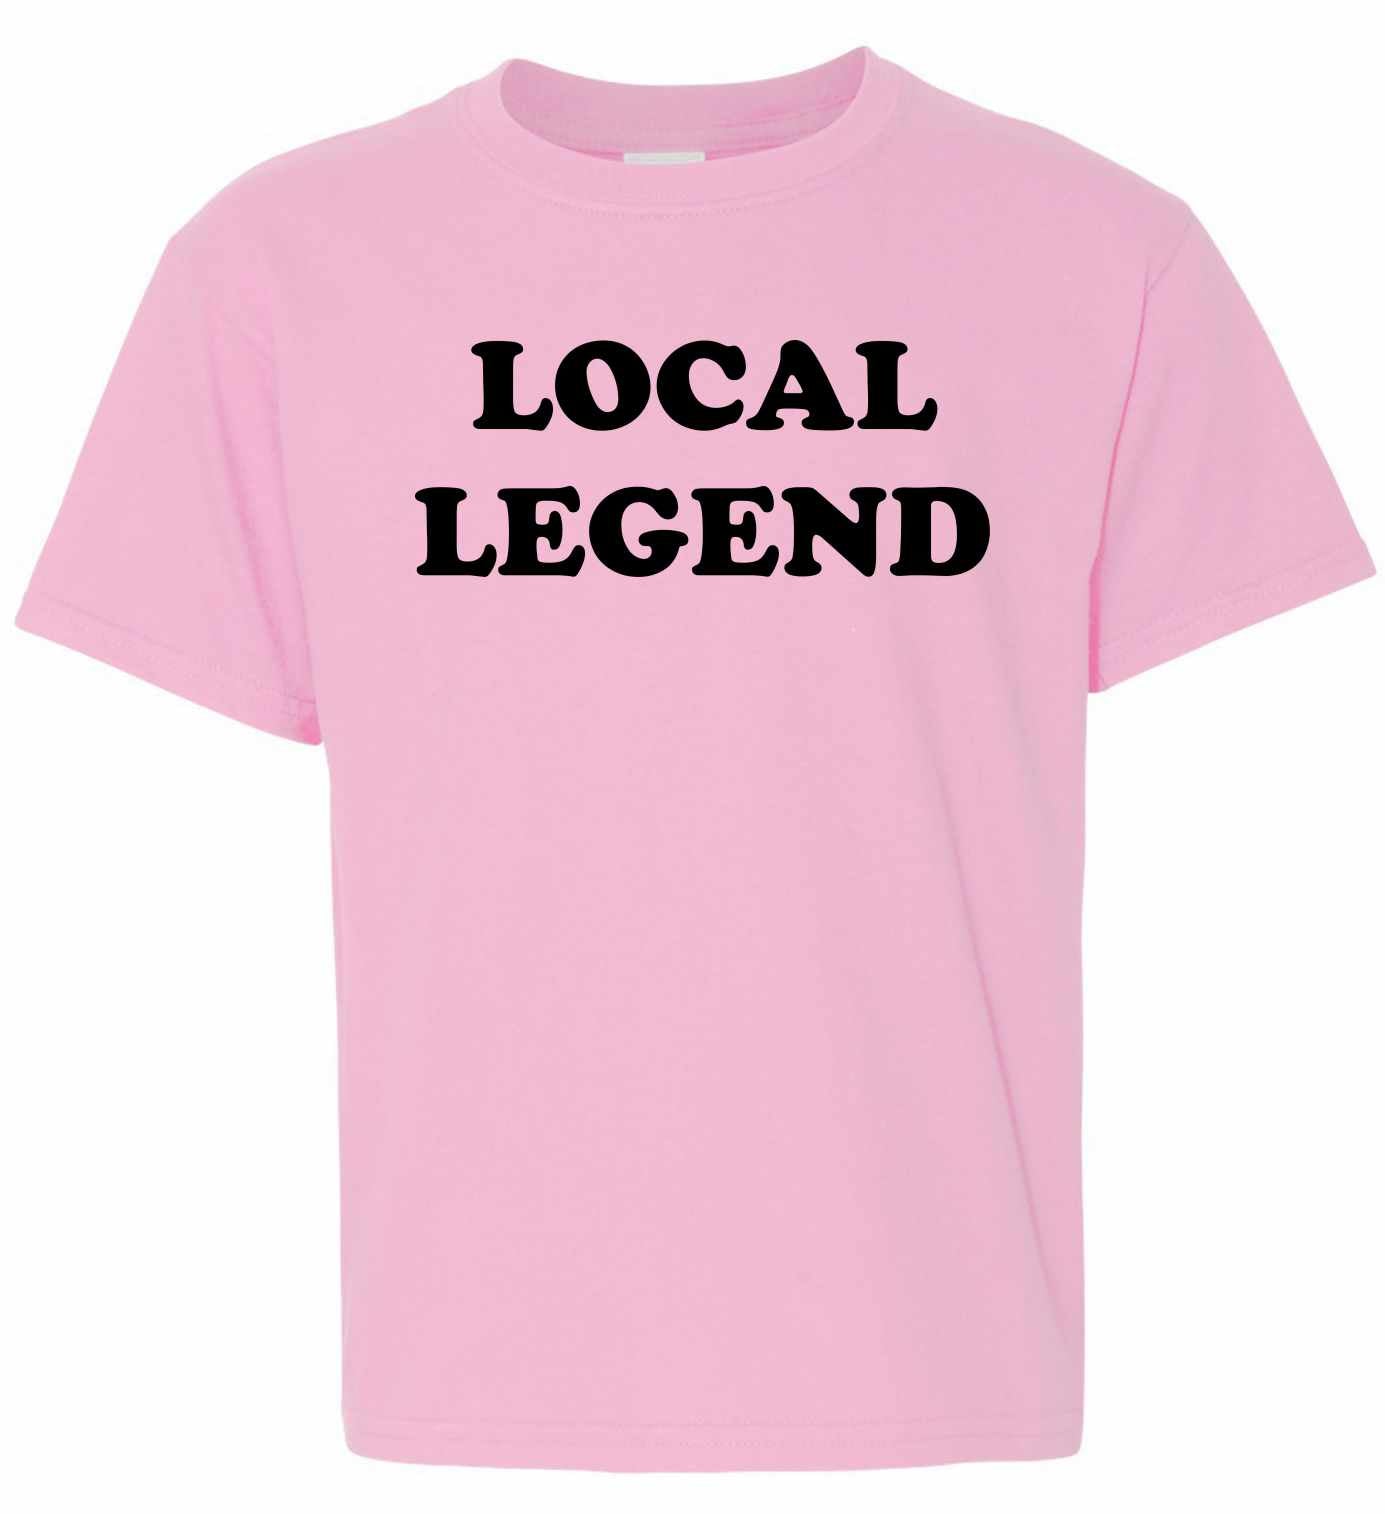 Local Legend on Kids T-Shirt (#1196-201)